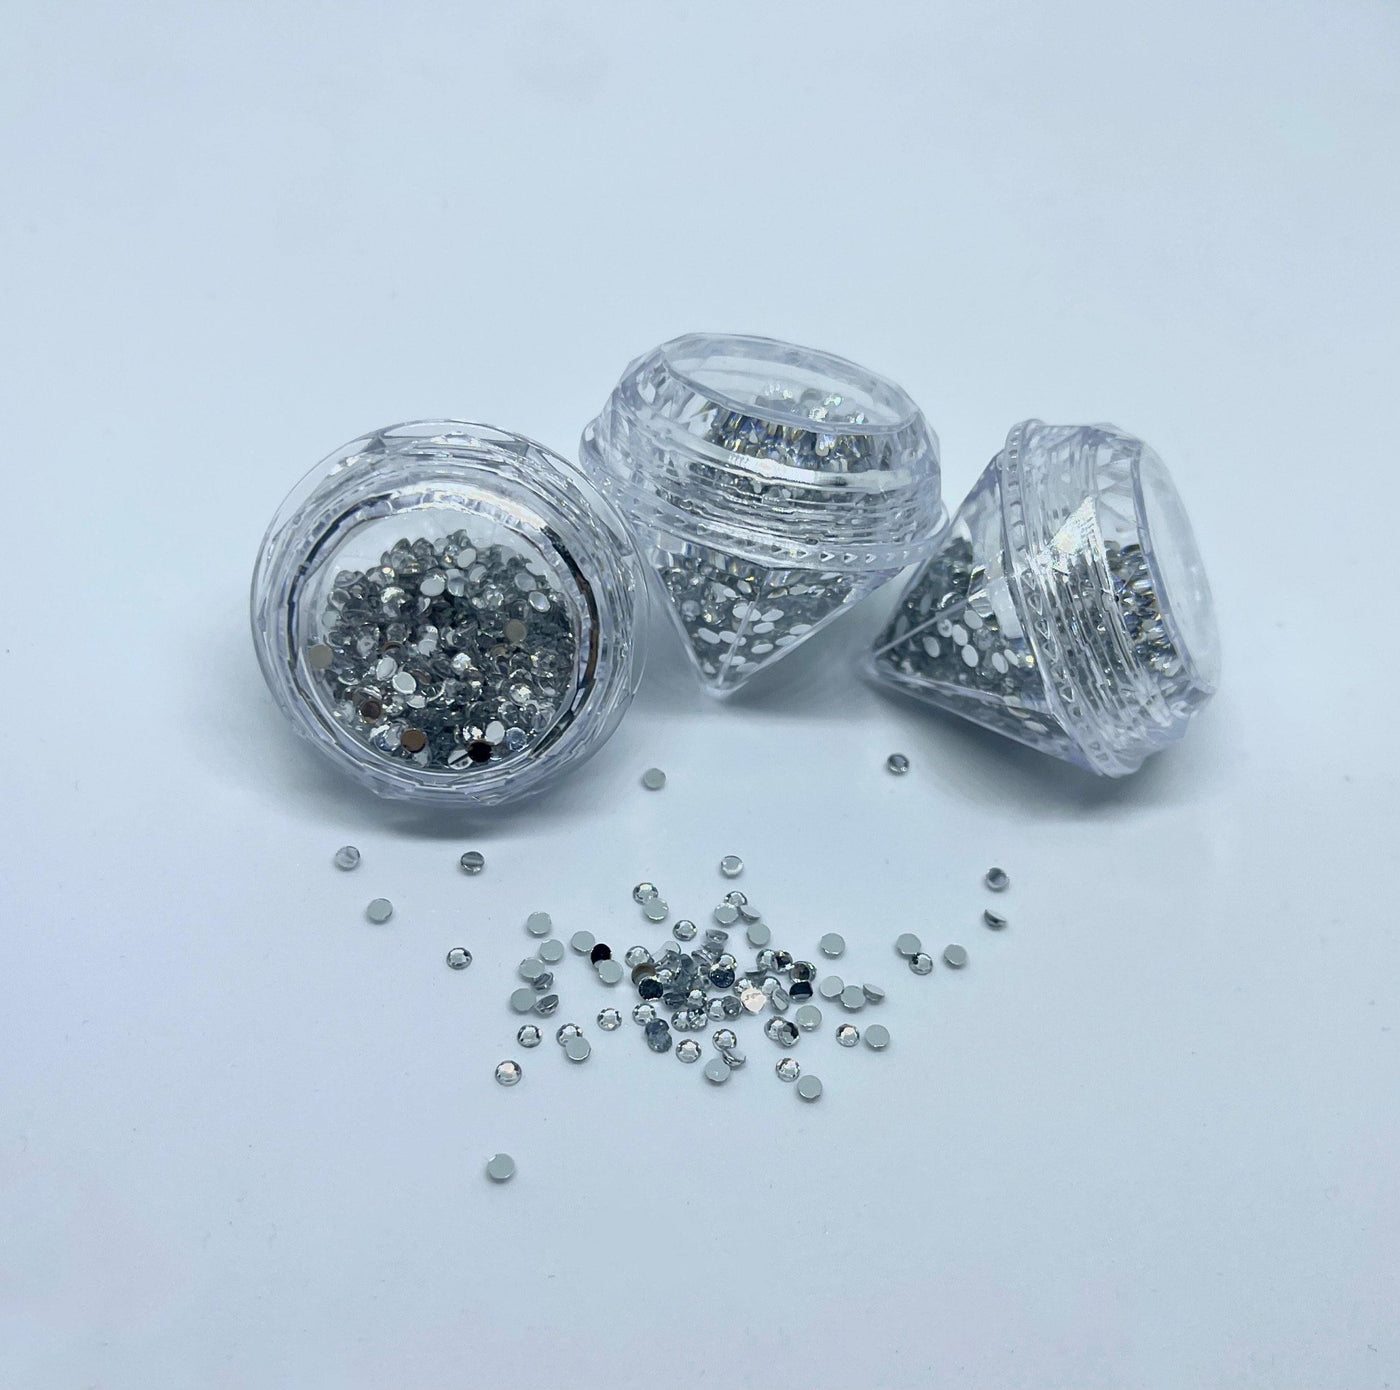 2mm Silver Stones - Doriana Cosmetics GmbH